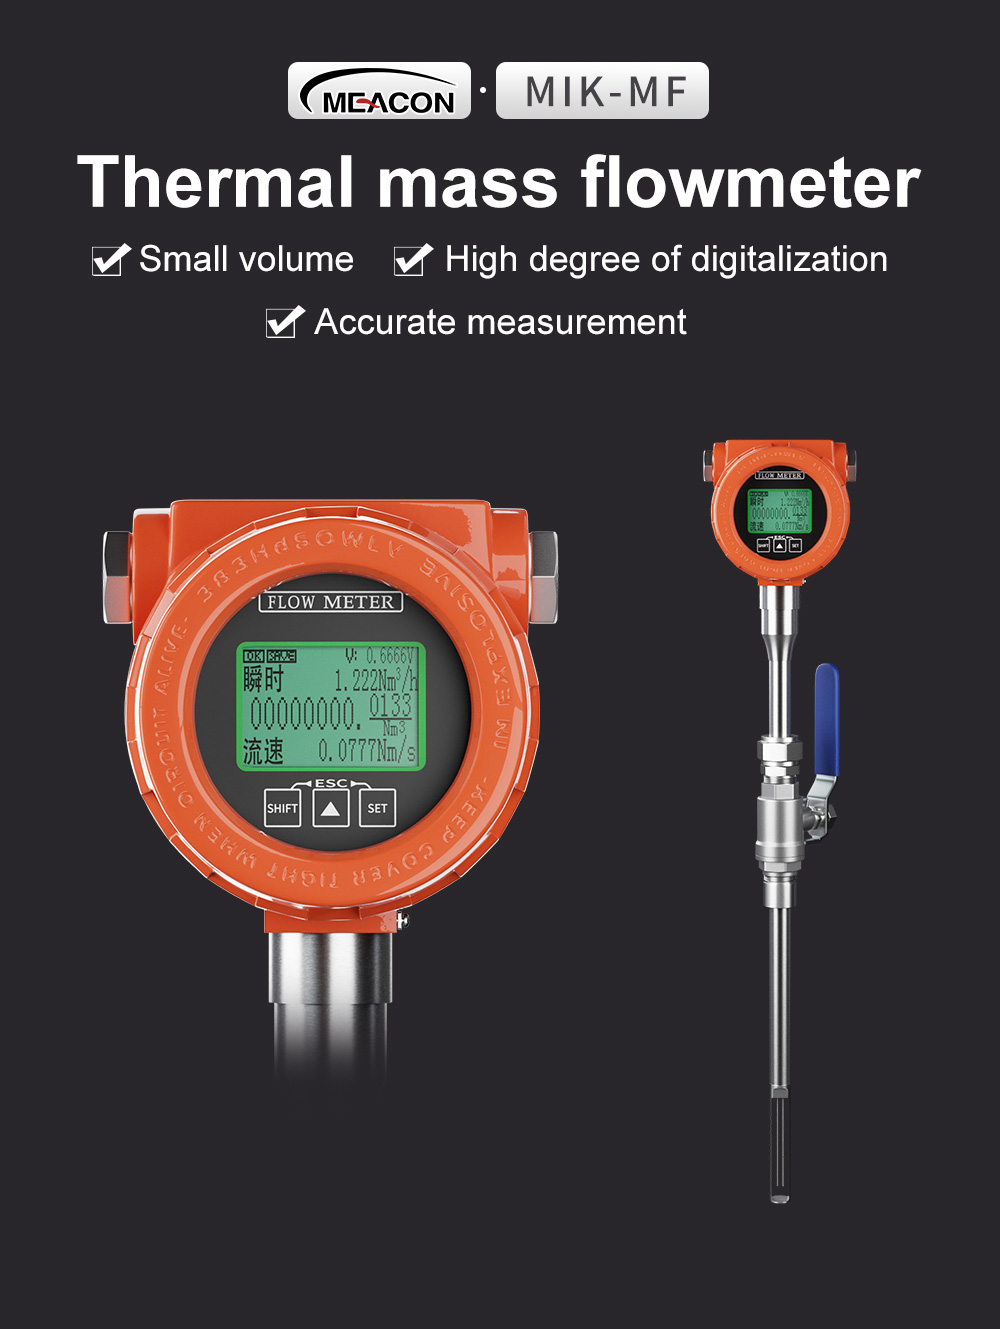 MIK-MF Thermal mass flowmeter